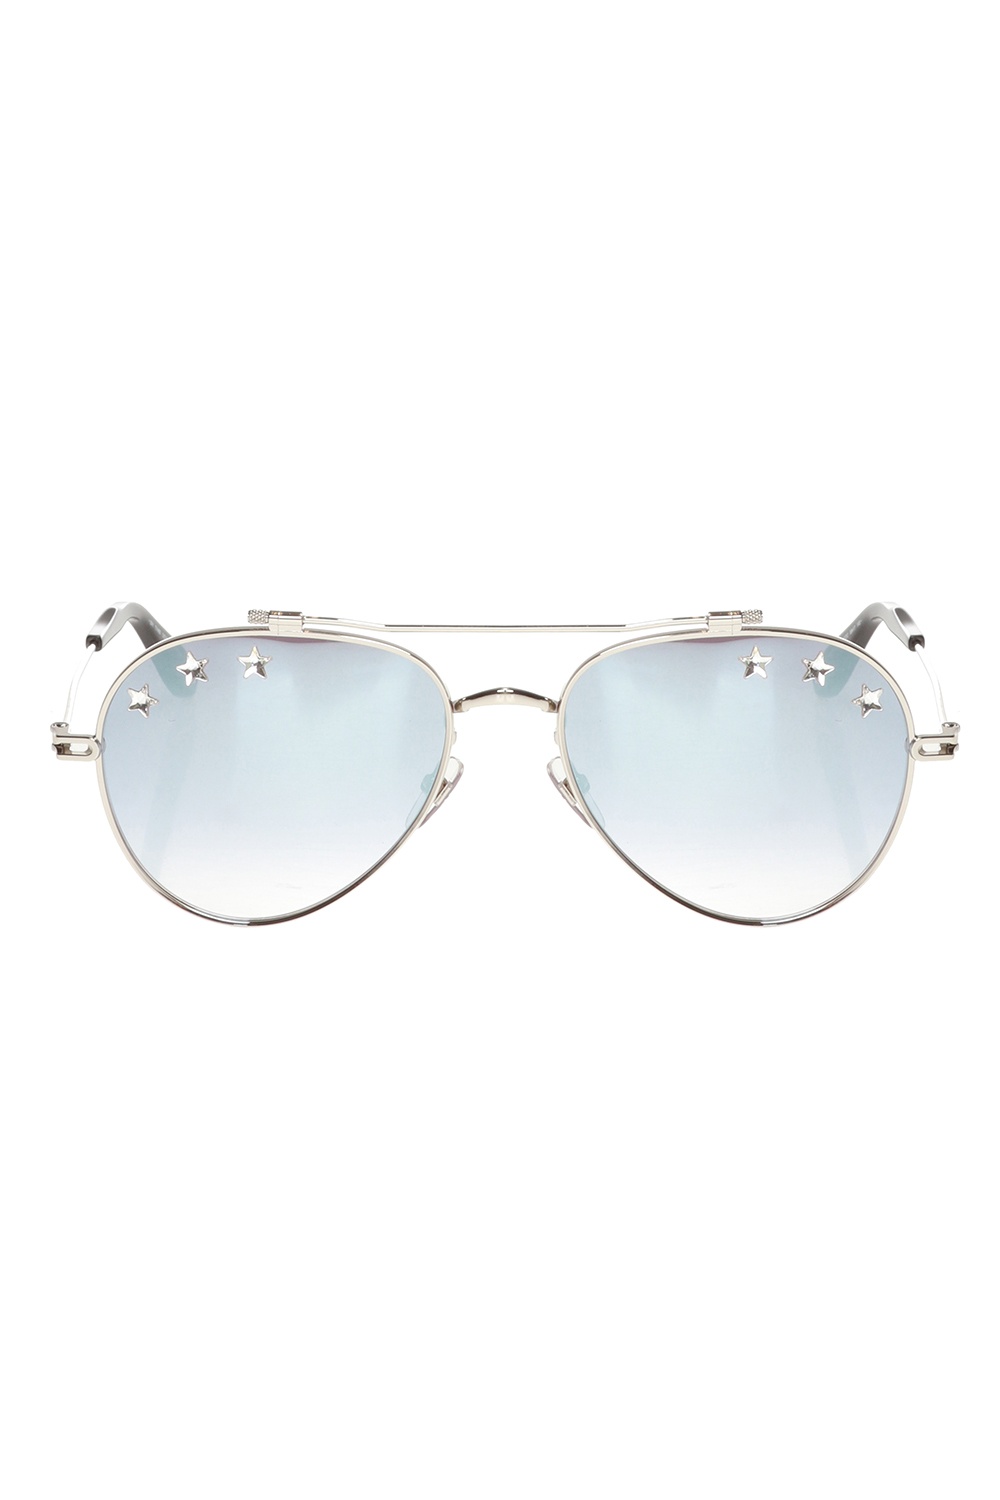 Givenchy Star motif sunglasses | Men's Accessories | Vitkac